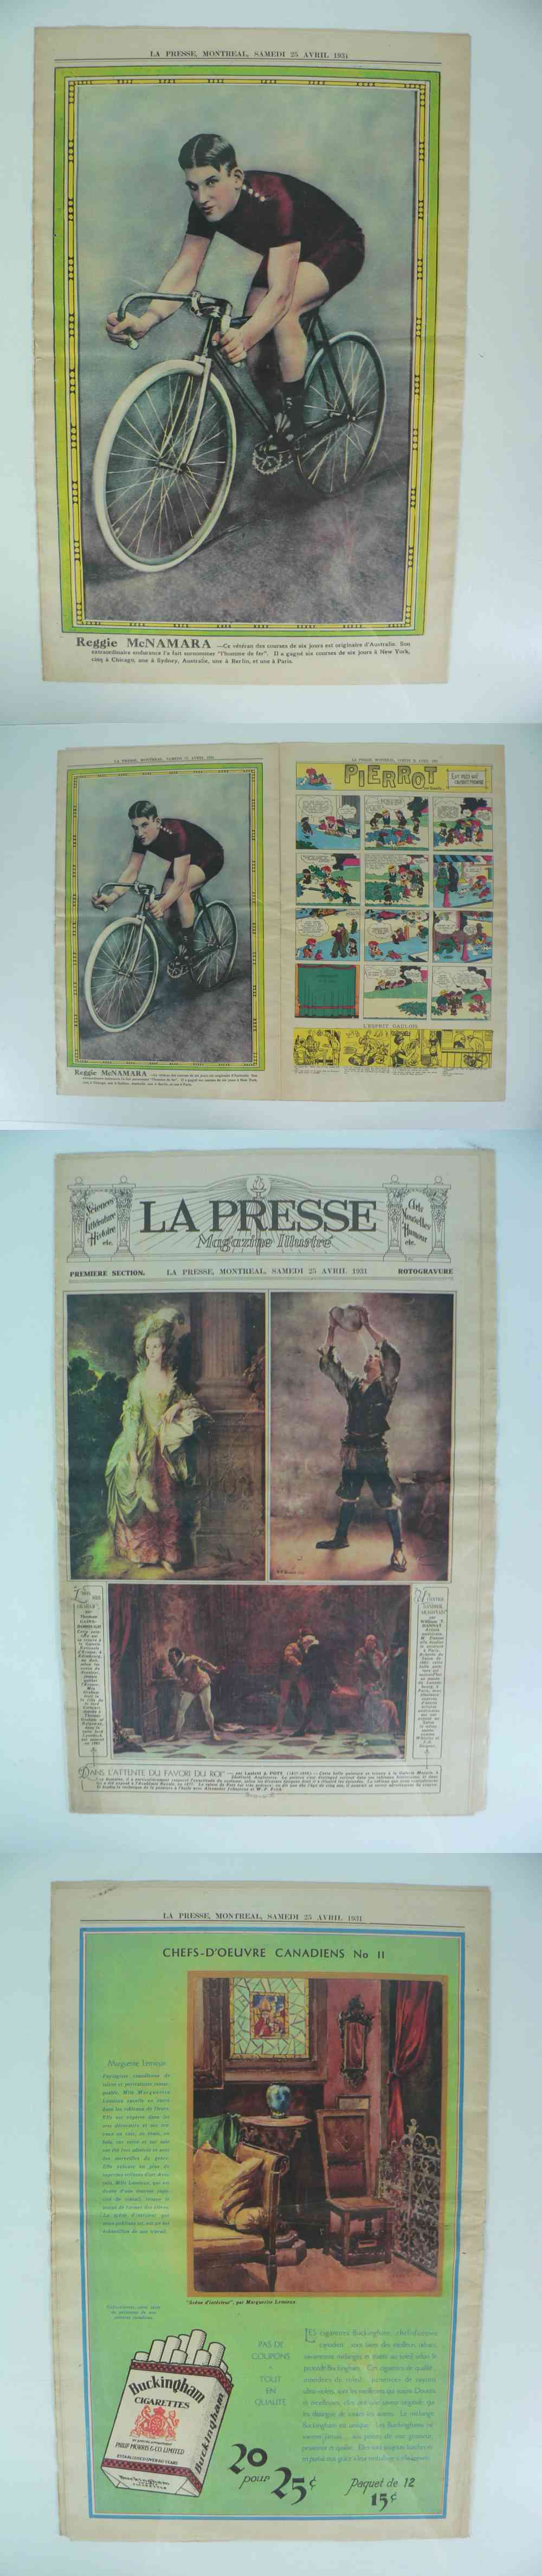 1931 LAPRESSE FULL NEWSPAPER INSIDE PHOTO R. MCNAMARA photo